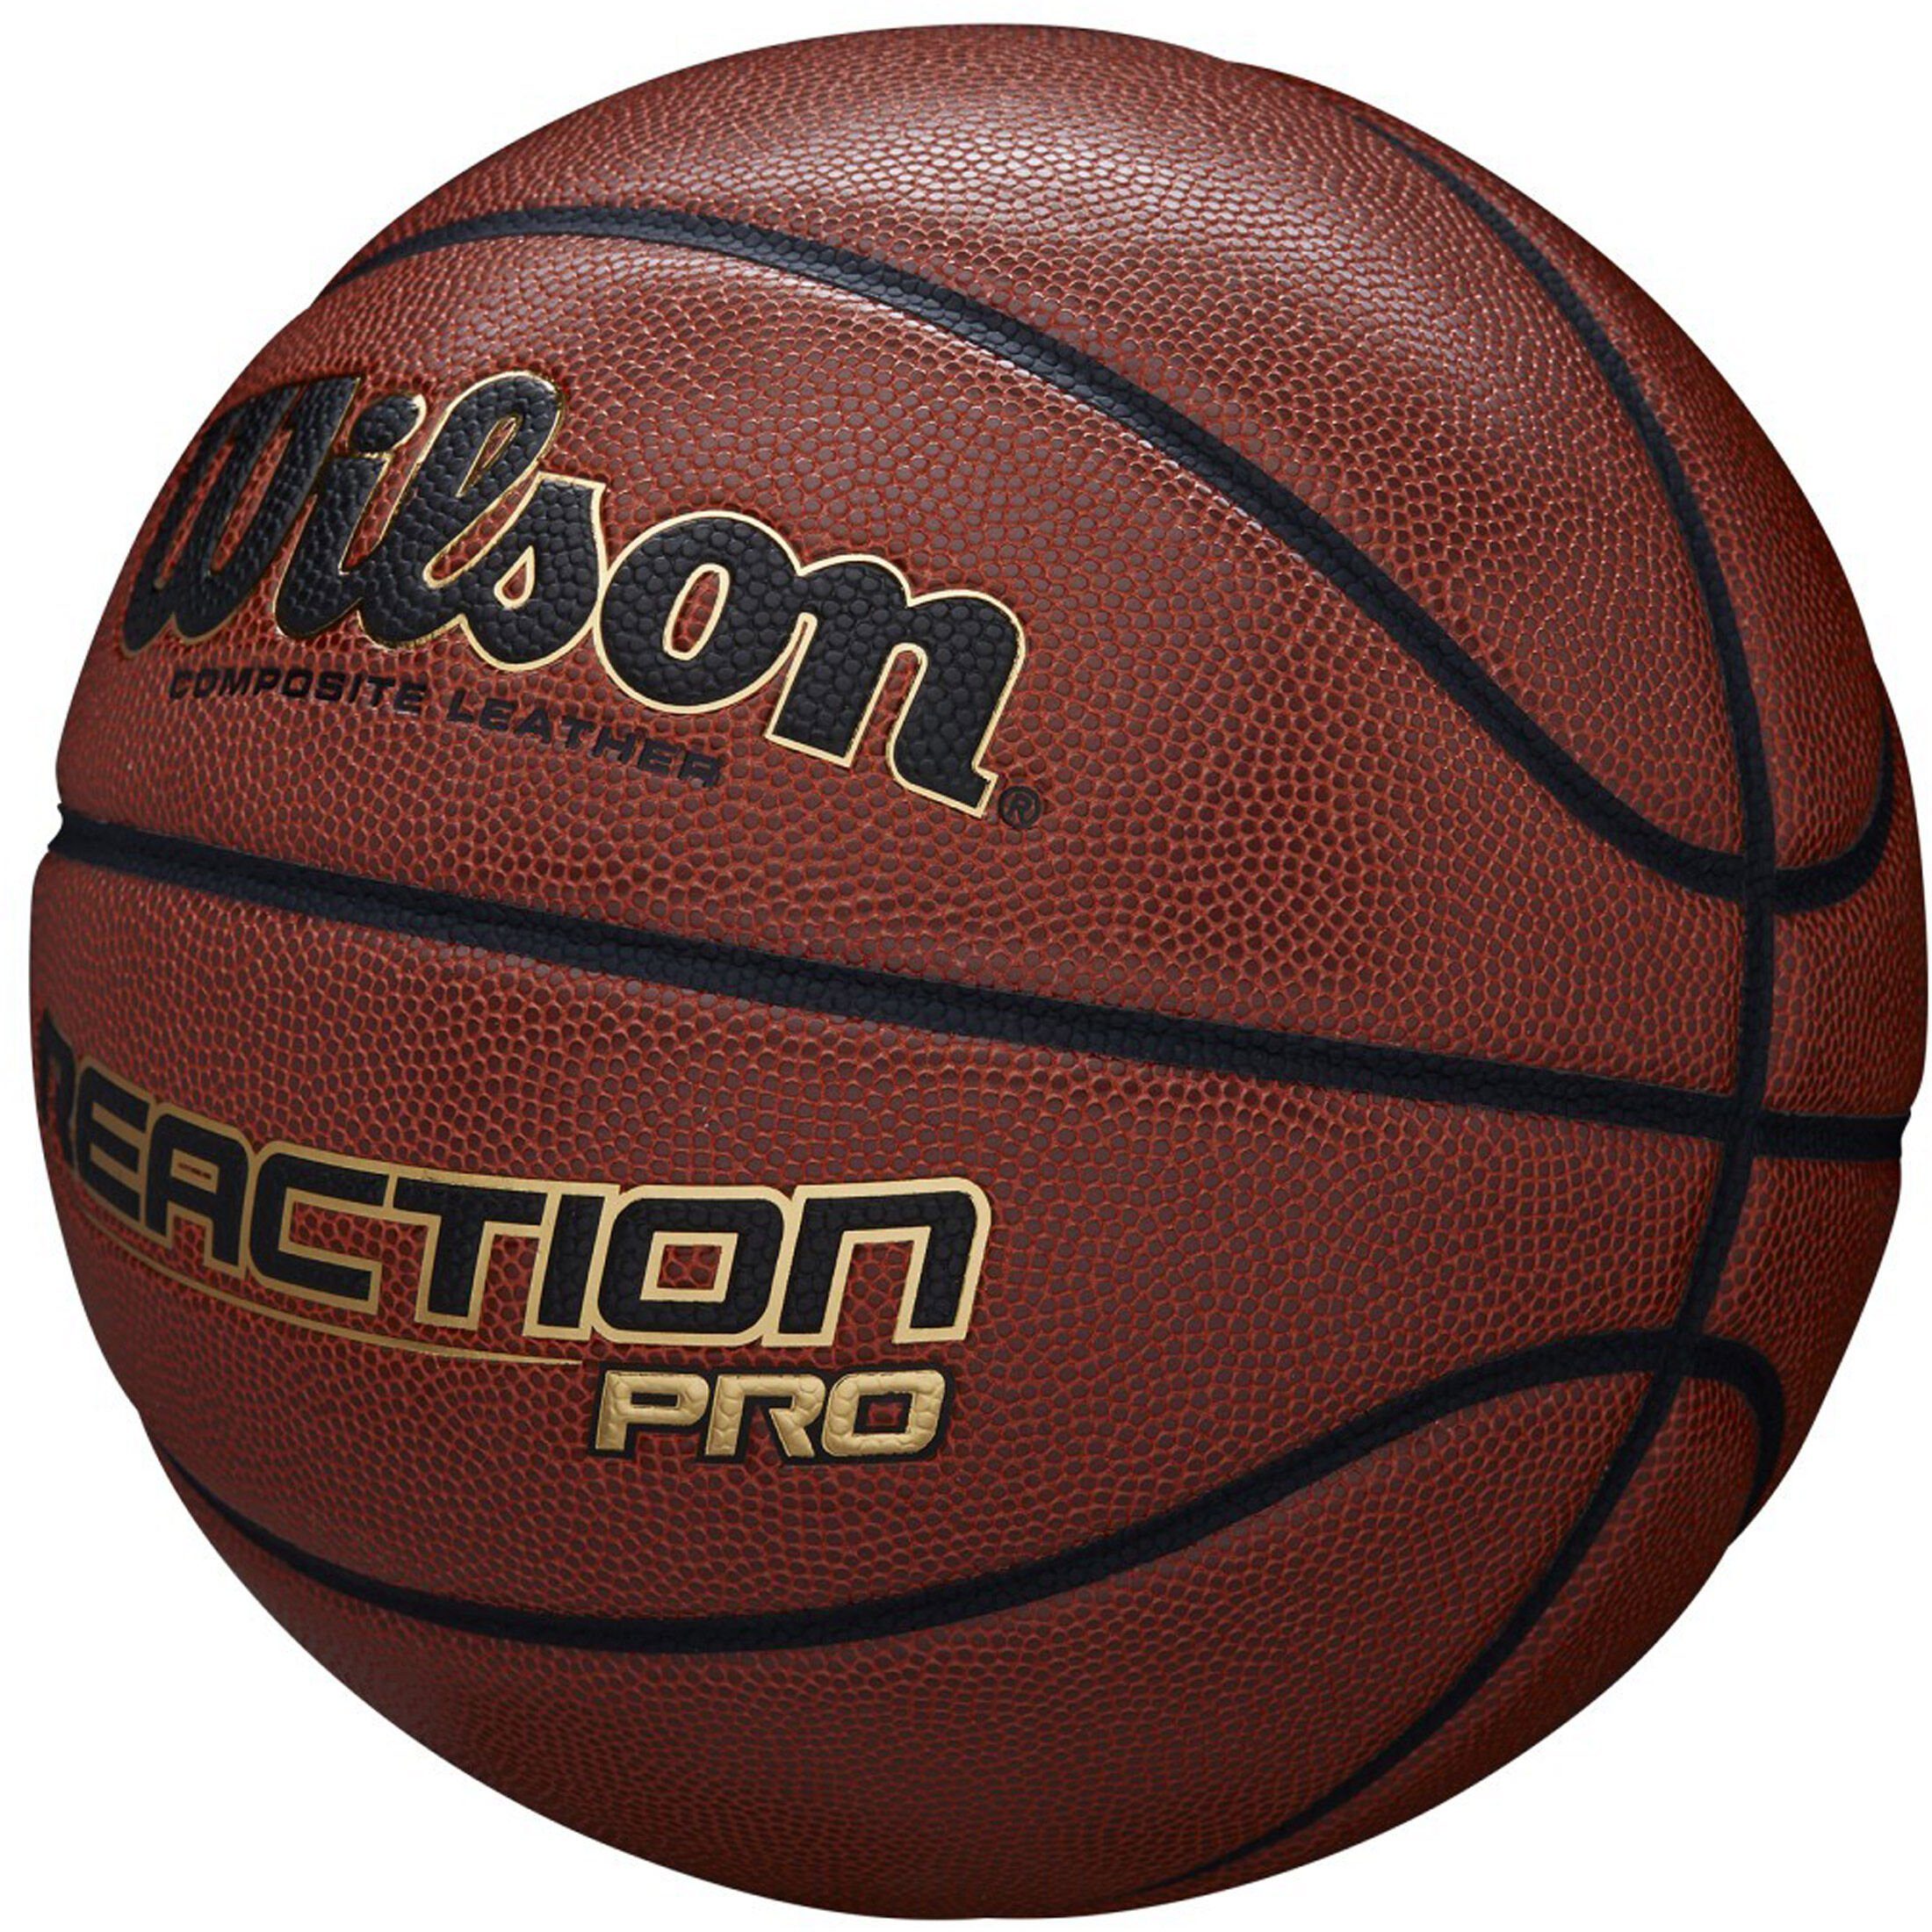 Reaction Pro Wilson Basketball Basketball